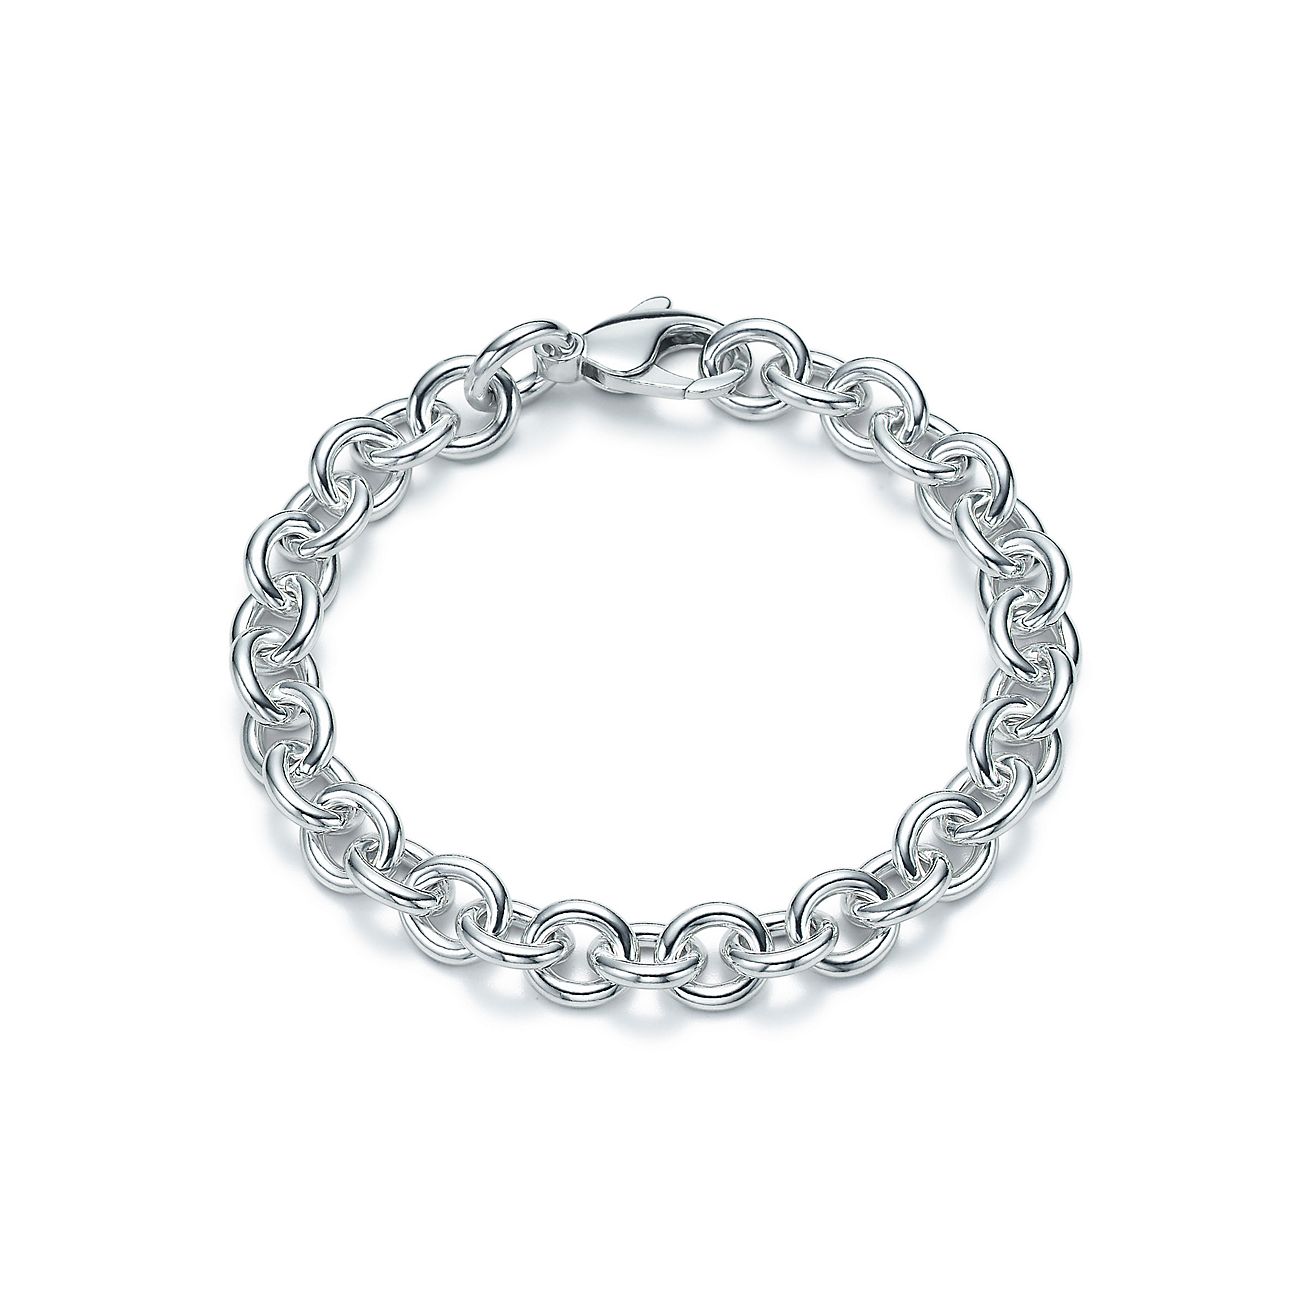 Medium round link bracelet in sterling silver, 7.5” long.